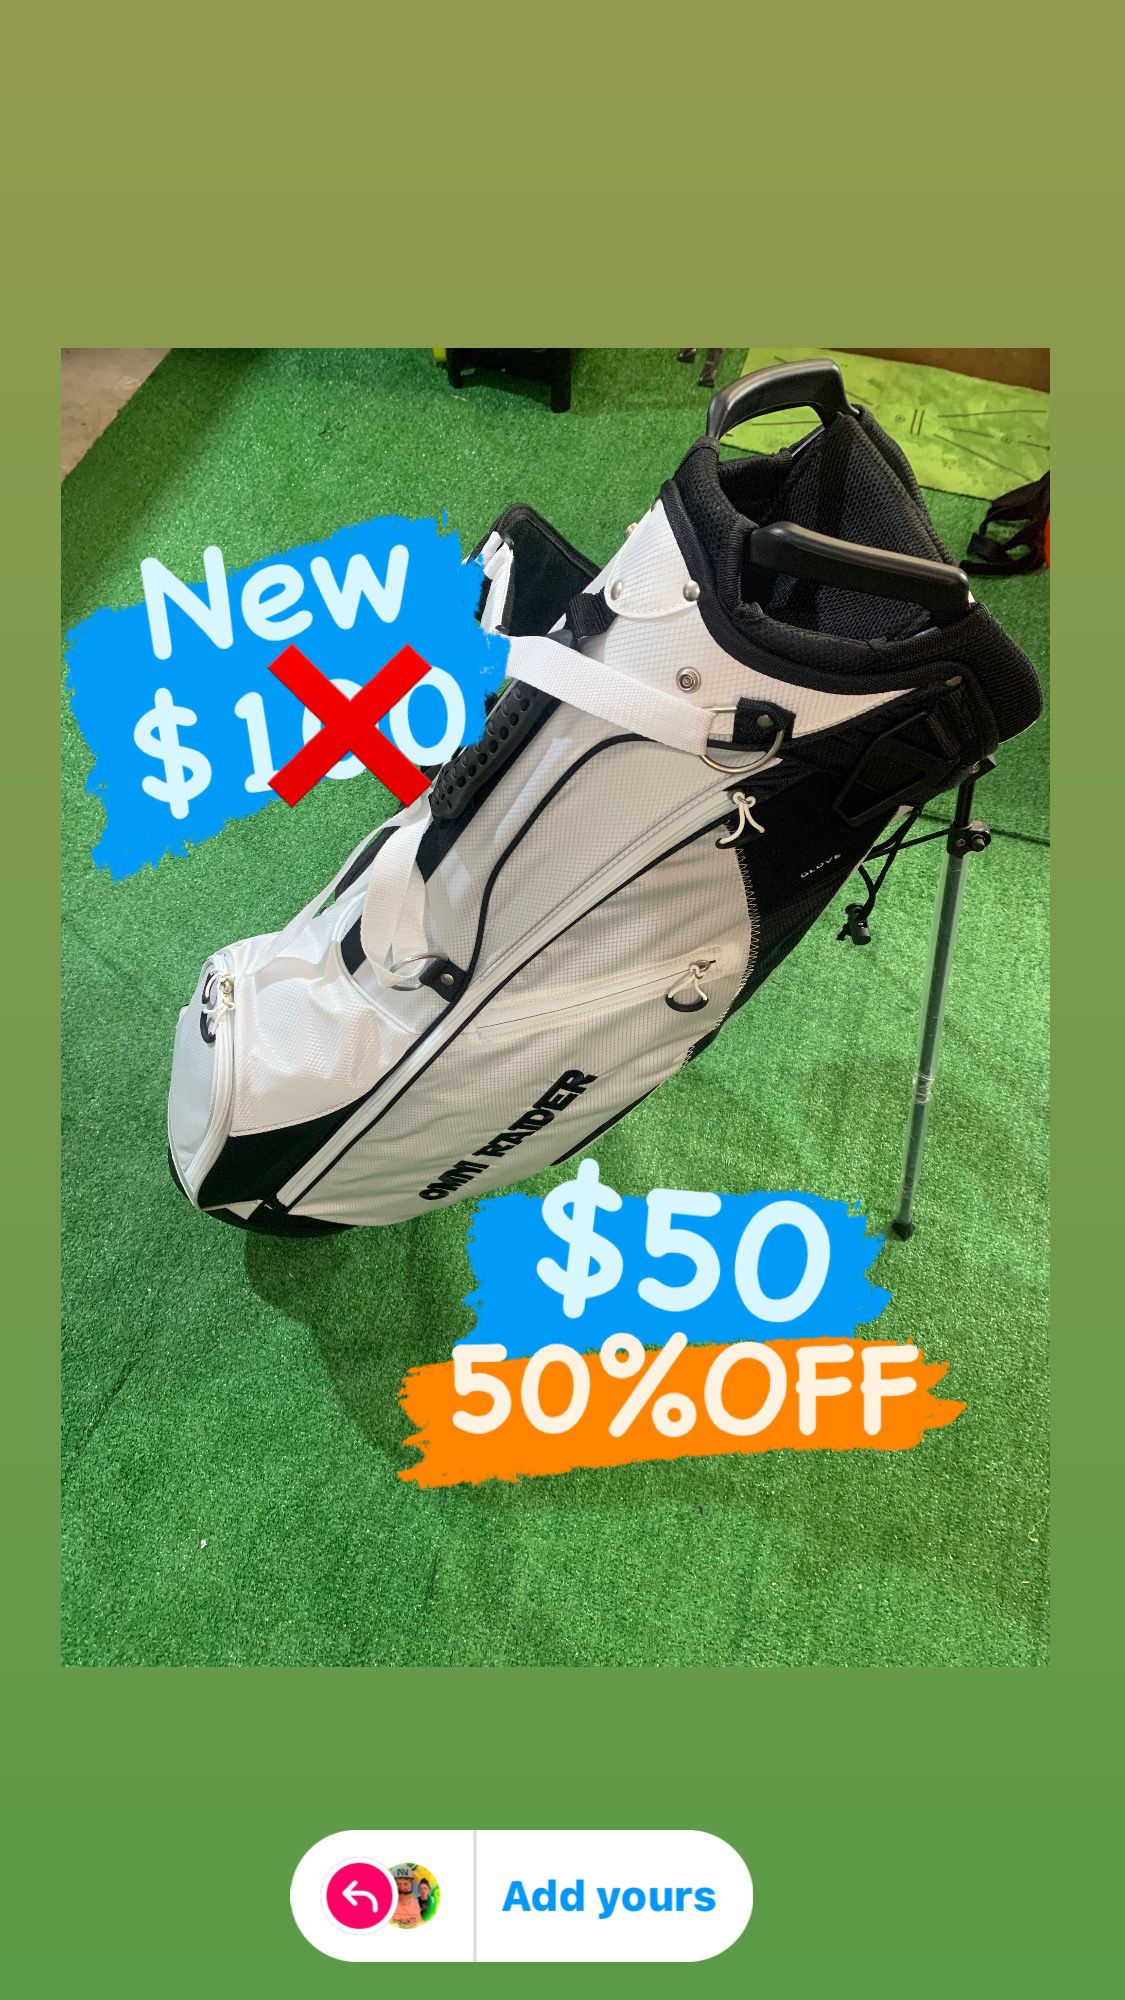 **NEW Golf Bag